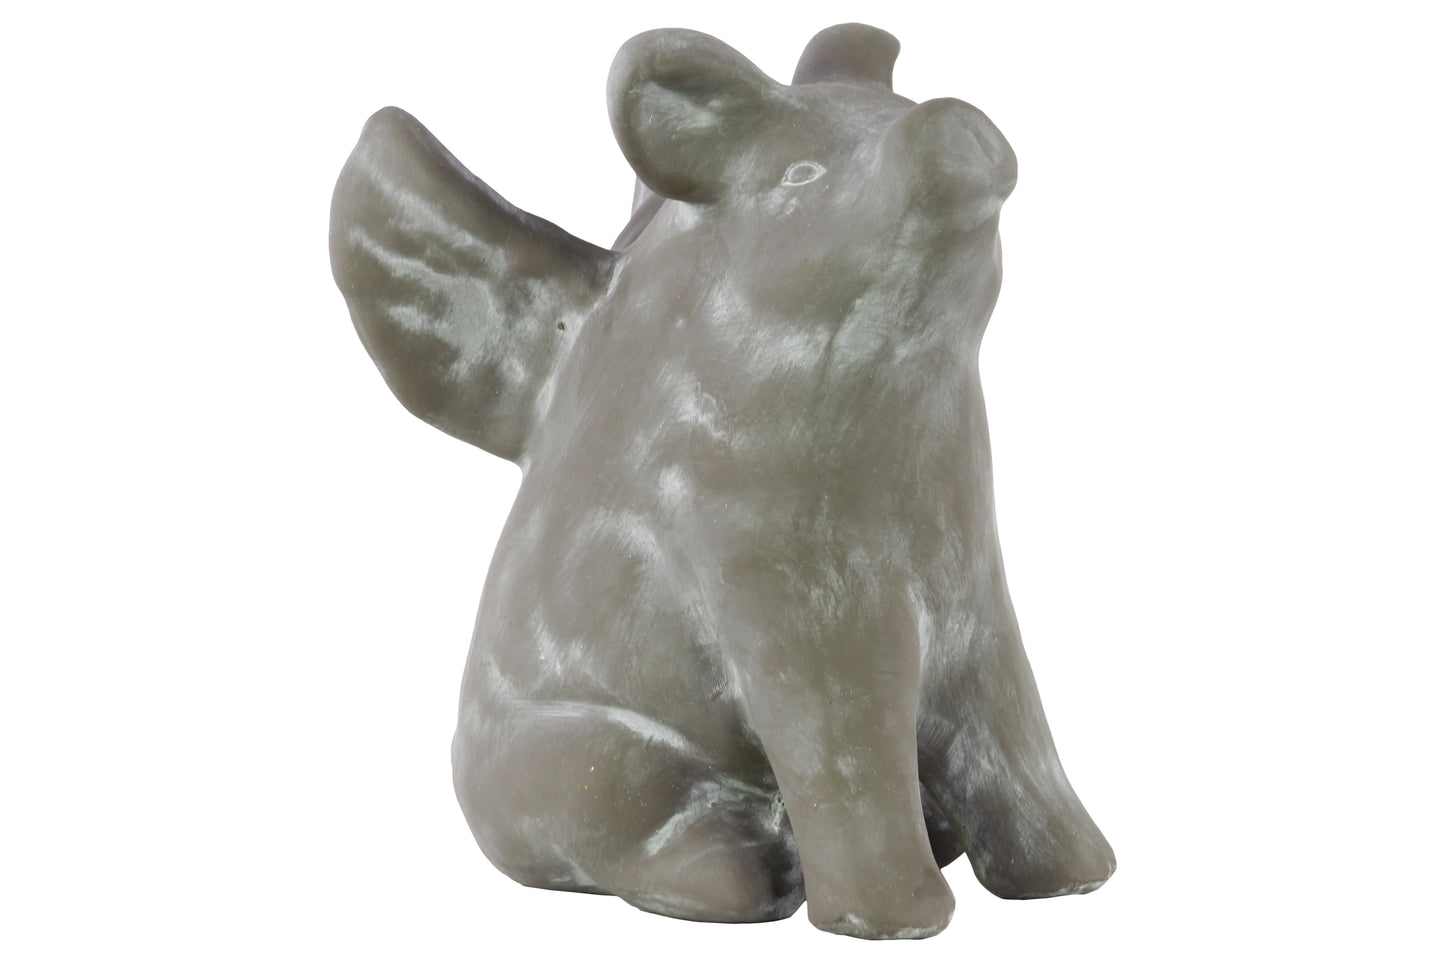 9" Terracotta Sitting Winged Pig Figurine